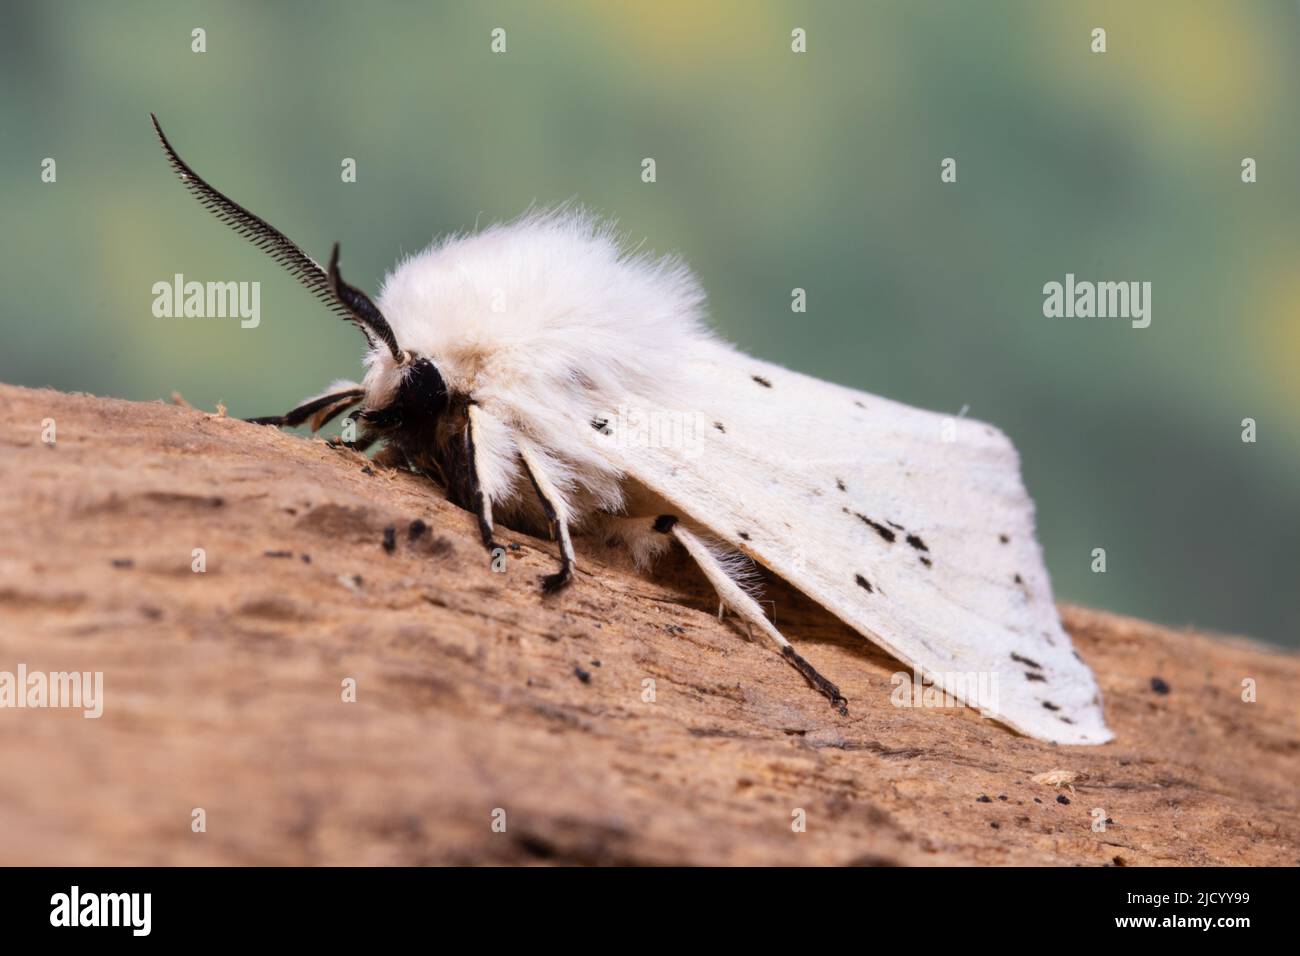 A white ermine moth, Spilosoma lubricipeda, resting on a rotten log. Stock Photo